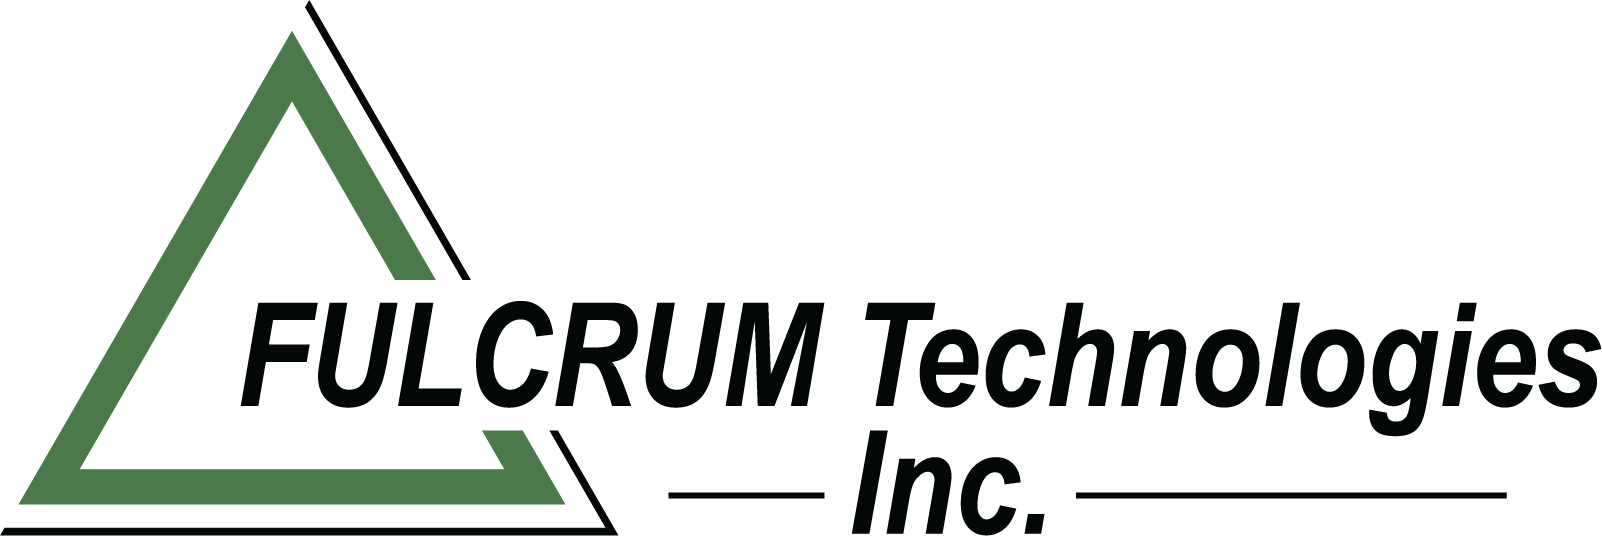 FulcrumTech Logo